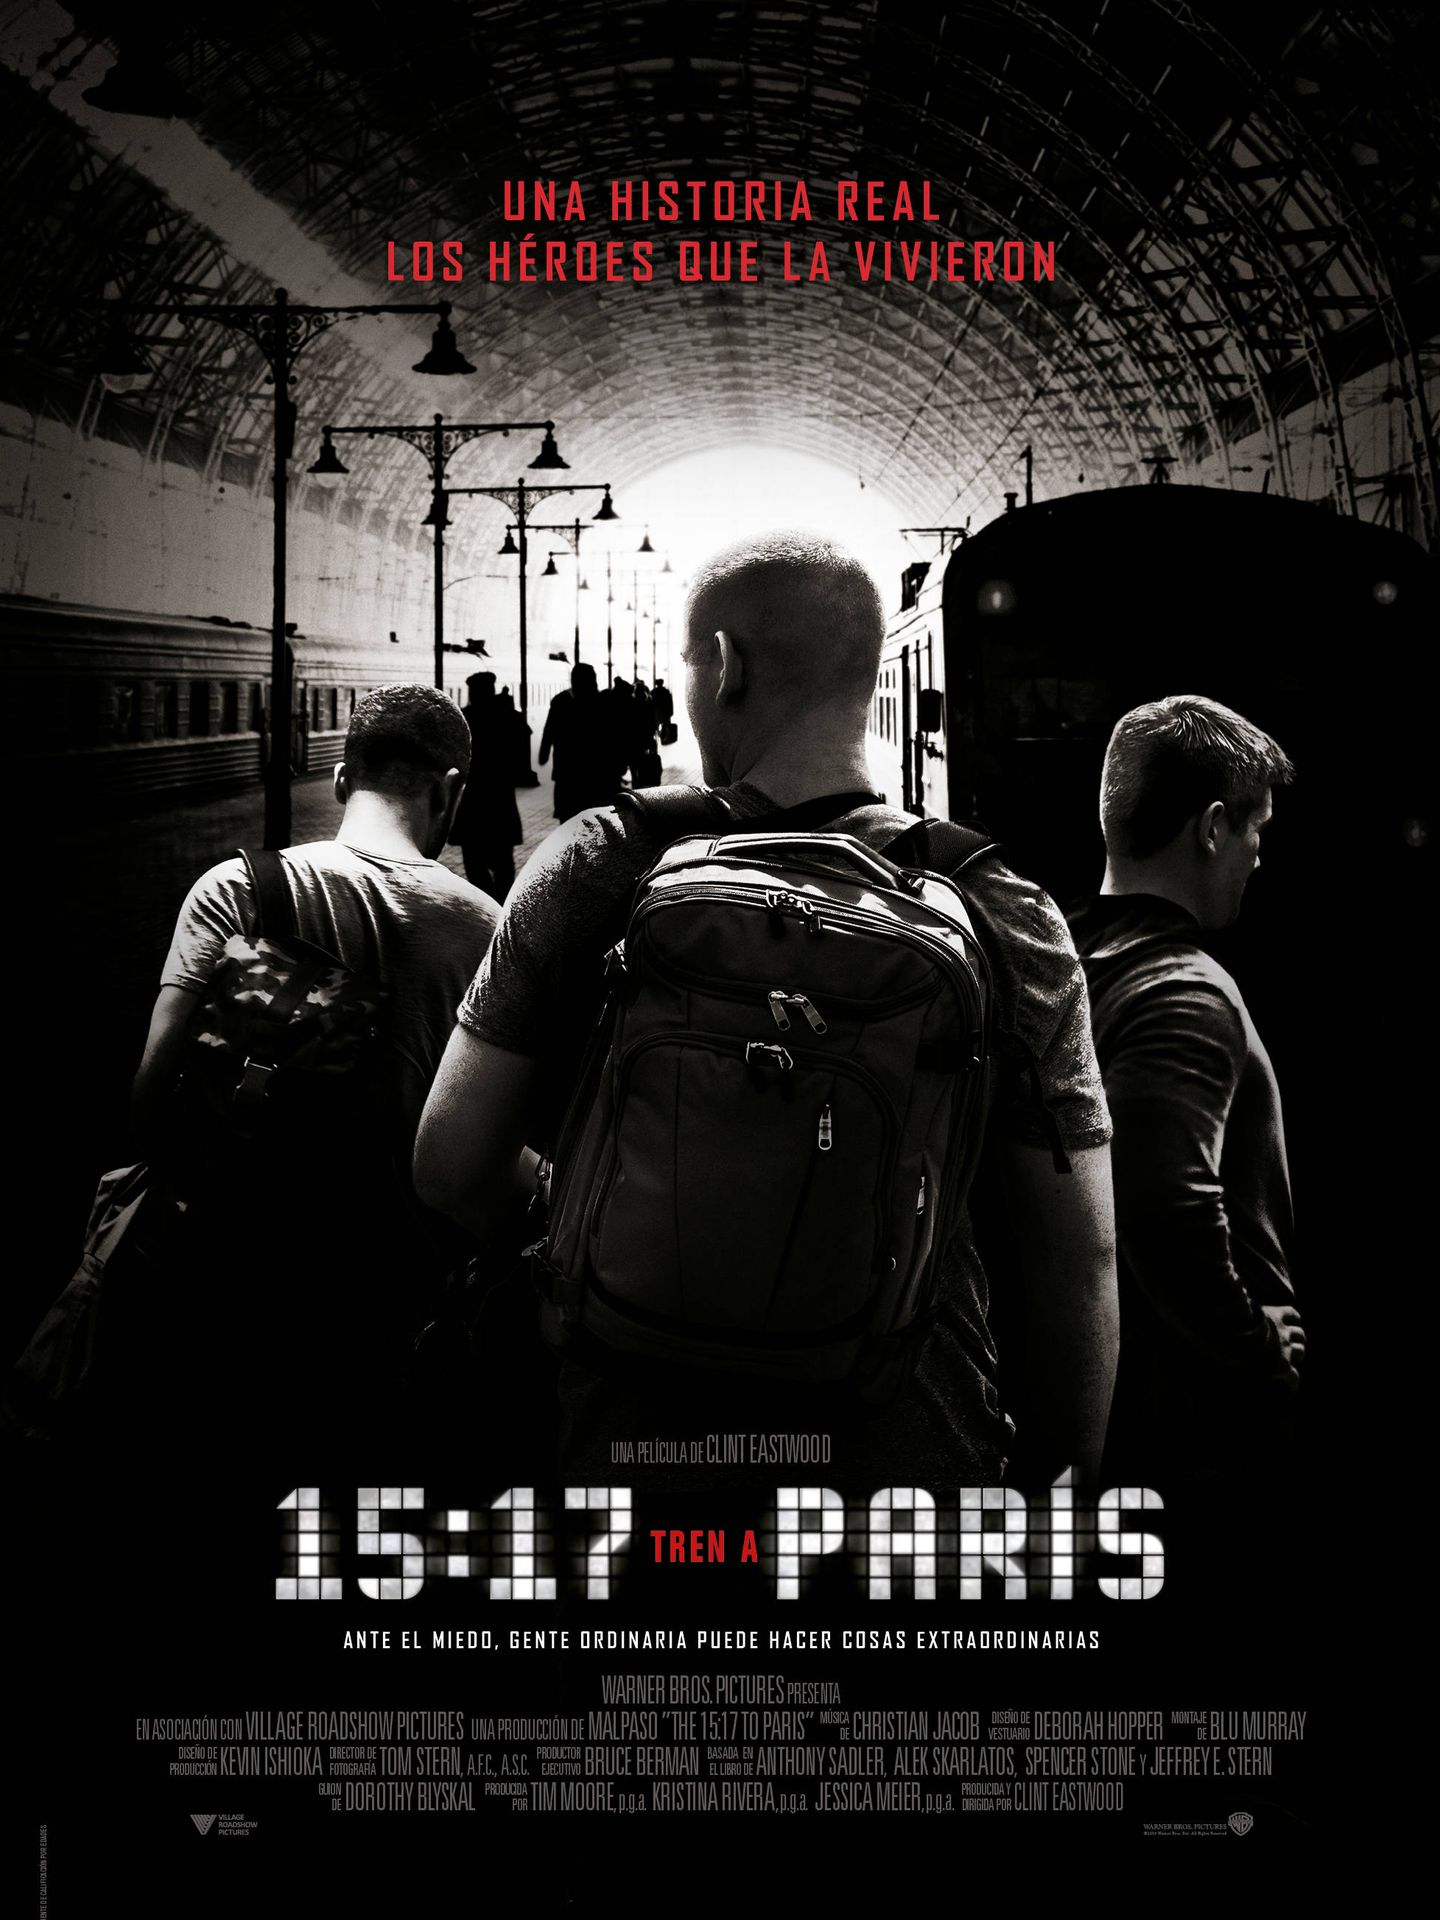 Cartel de '15:17 Tren a París'.